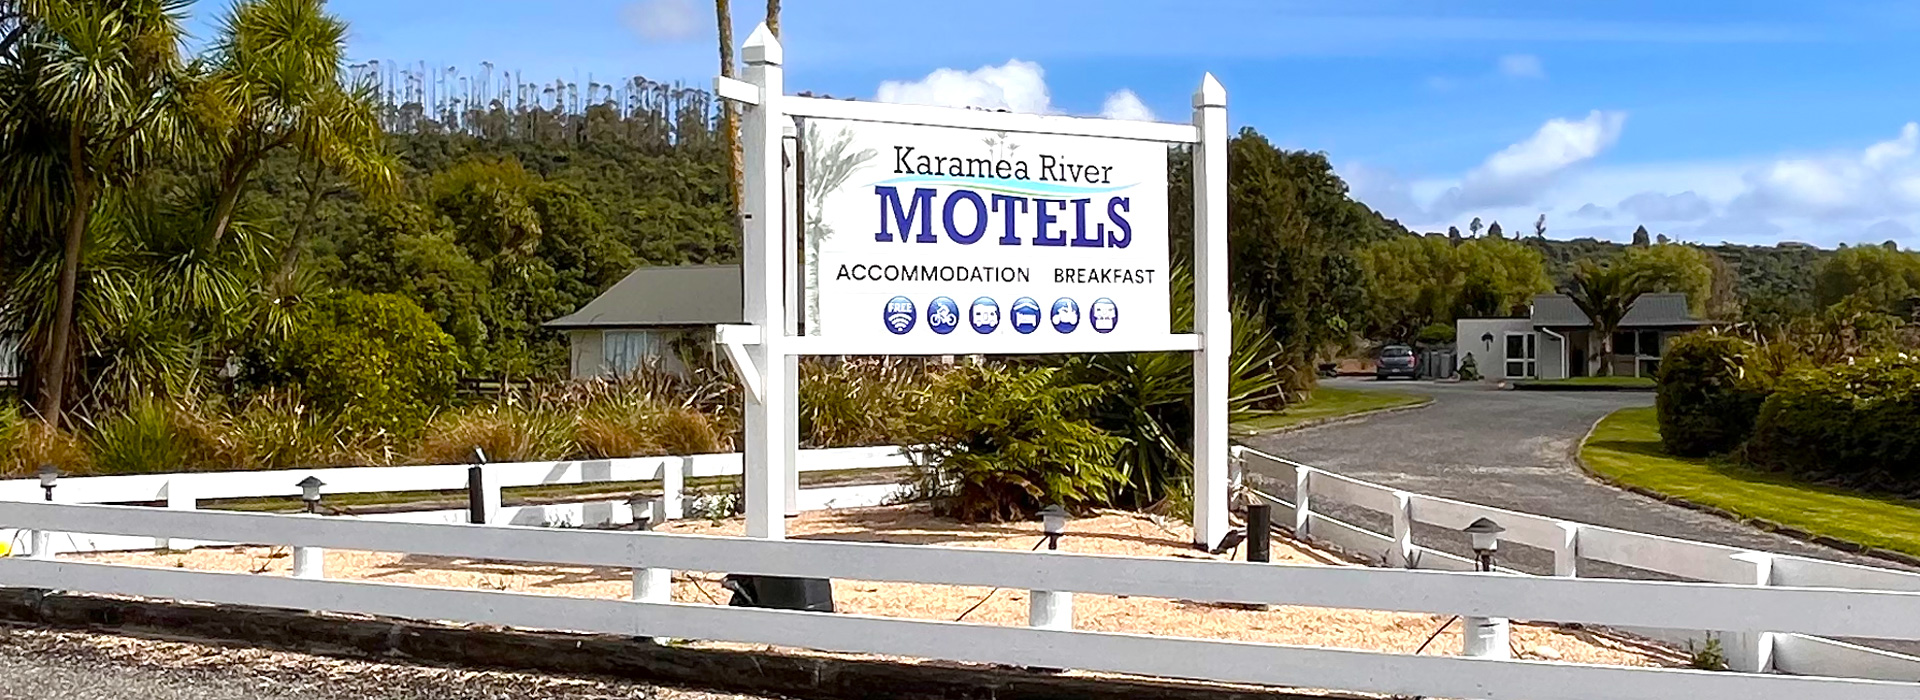 Karamea River Motels – Motel Suites • Motorhome Park • Holiday House